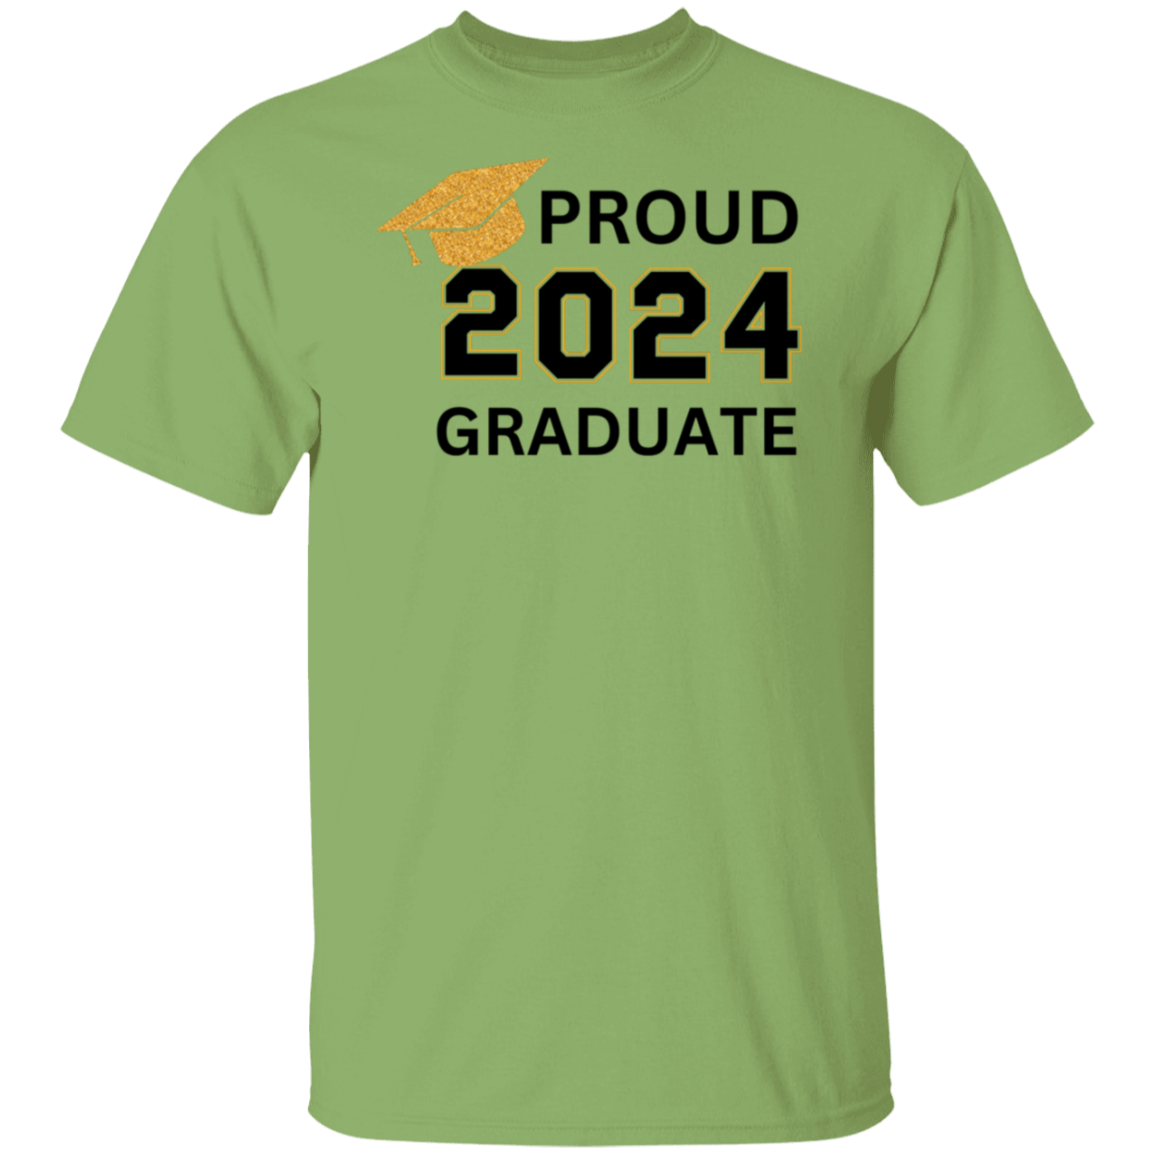 Graduation | T-Shirt |Proud 2024 Graduate